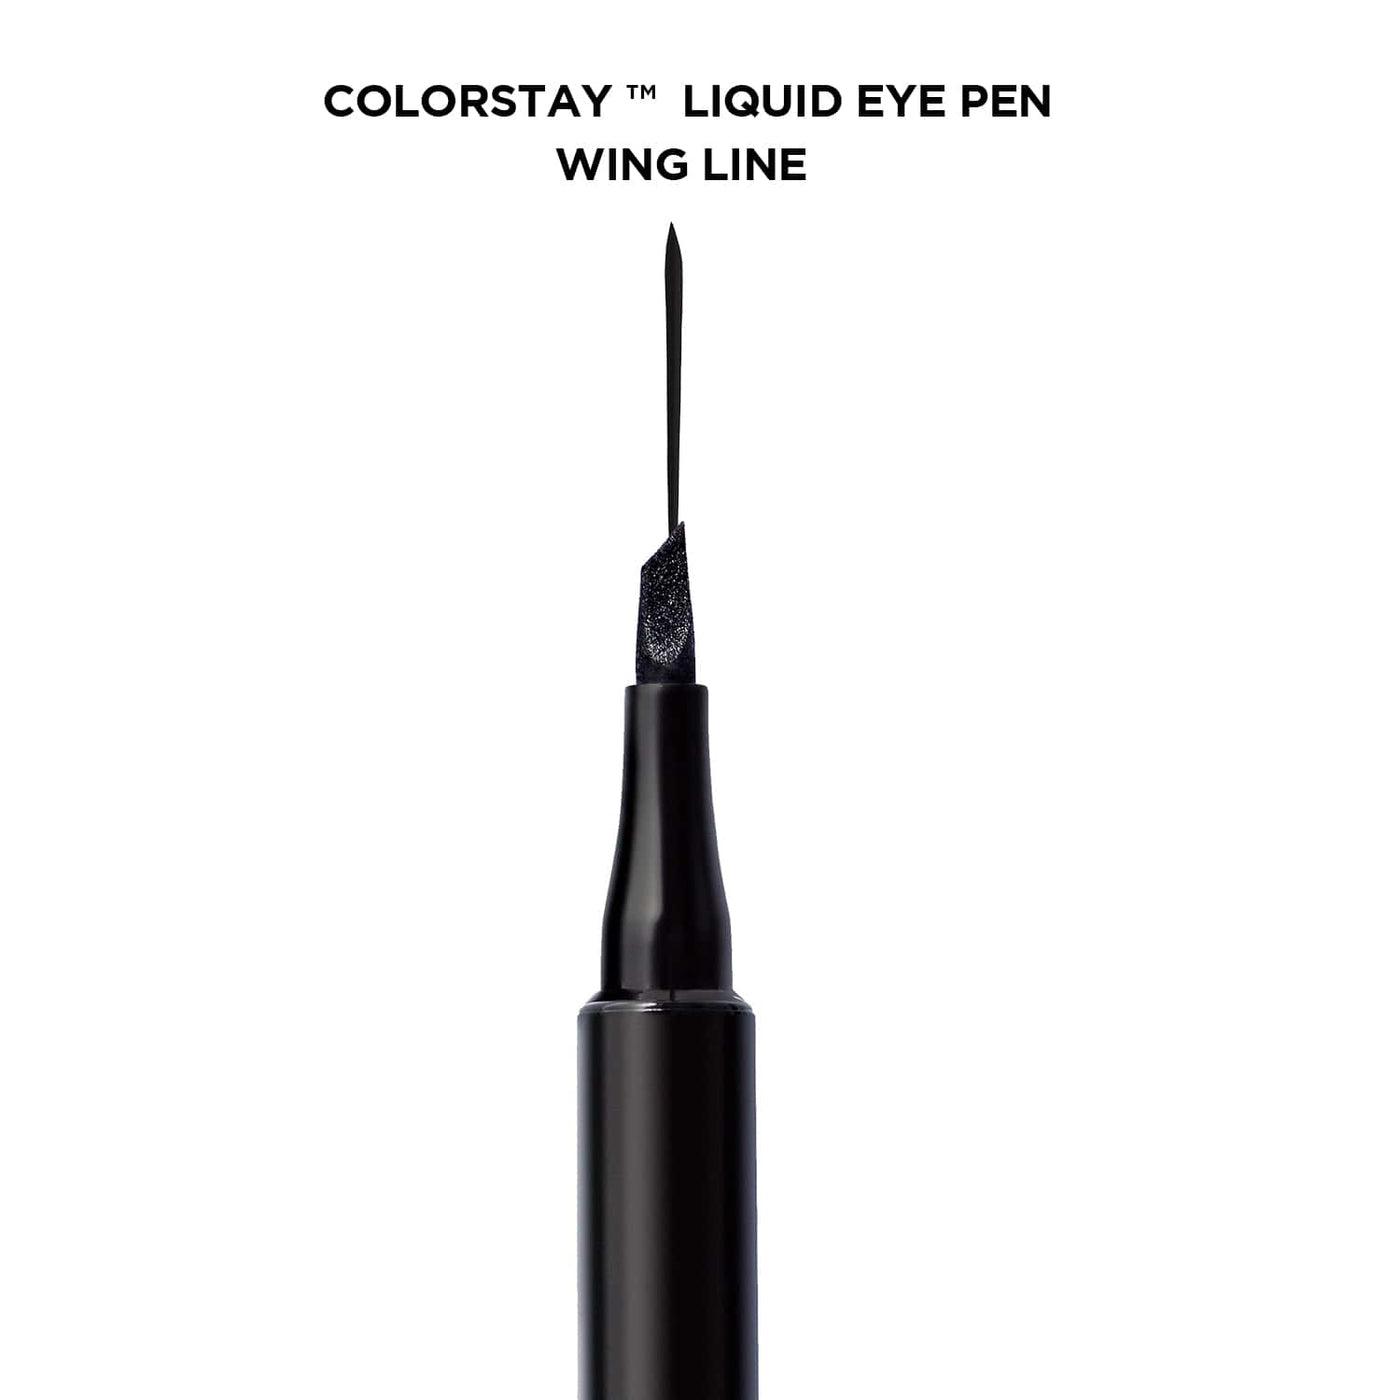 Colorstay Liquid Eye Pen